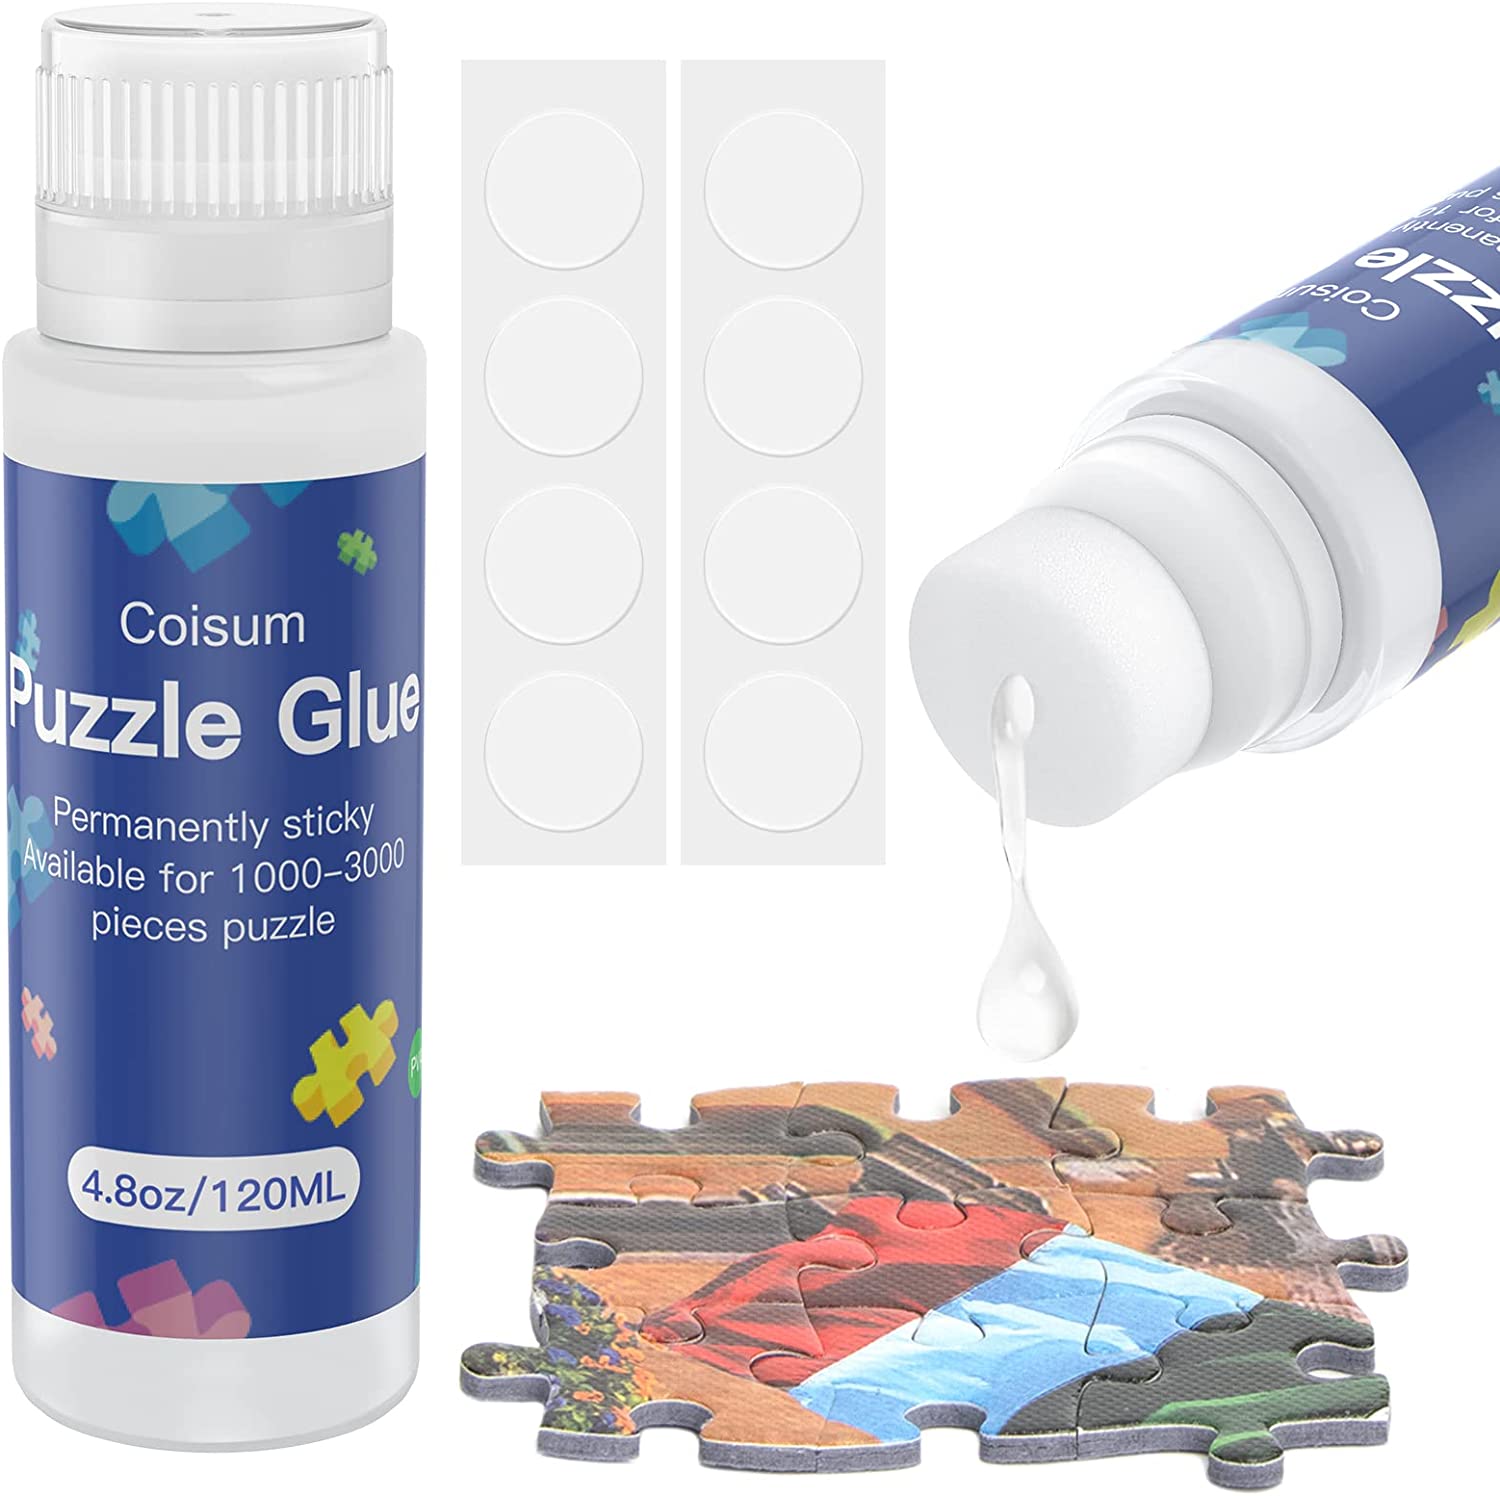  EuroGraphics Smart-Puzzle Glue Jigsaw Puzzle Accessory